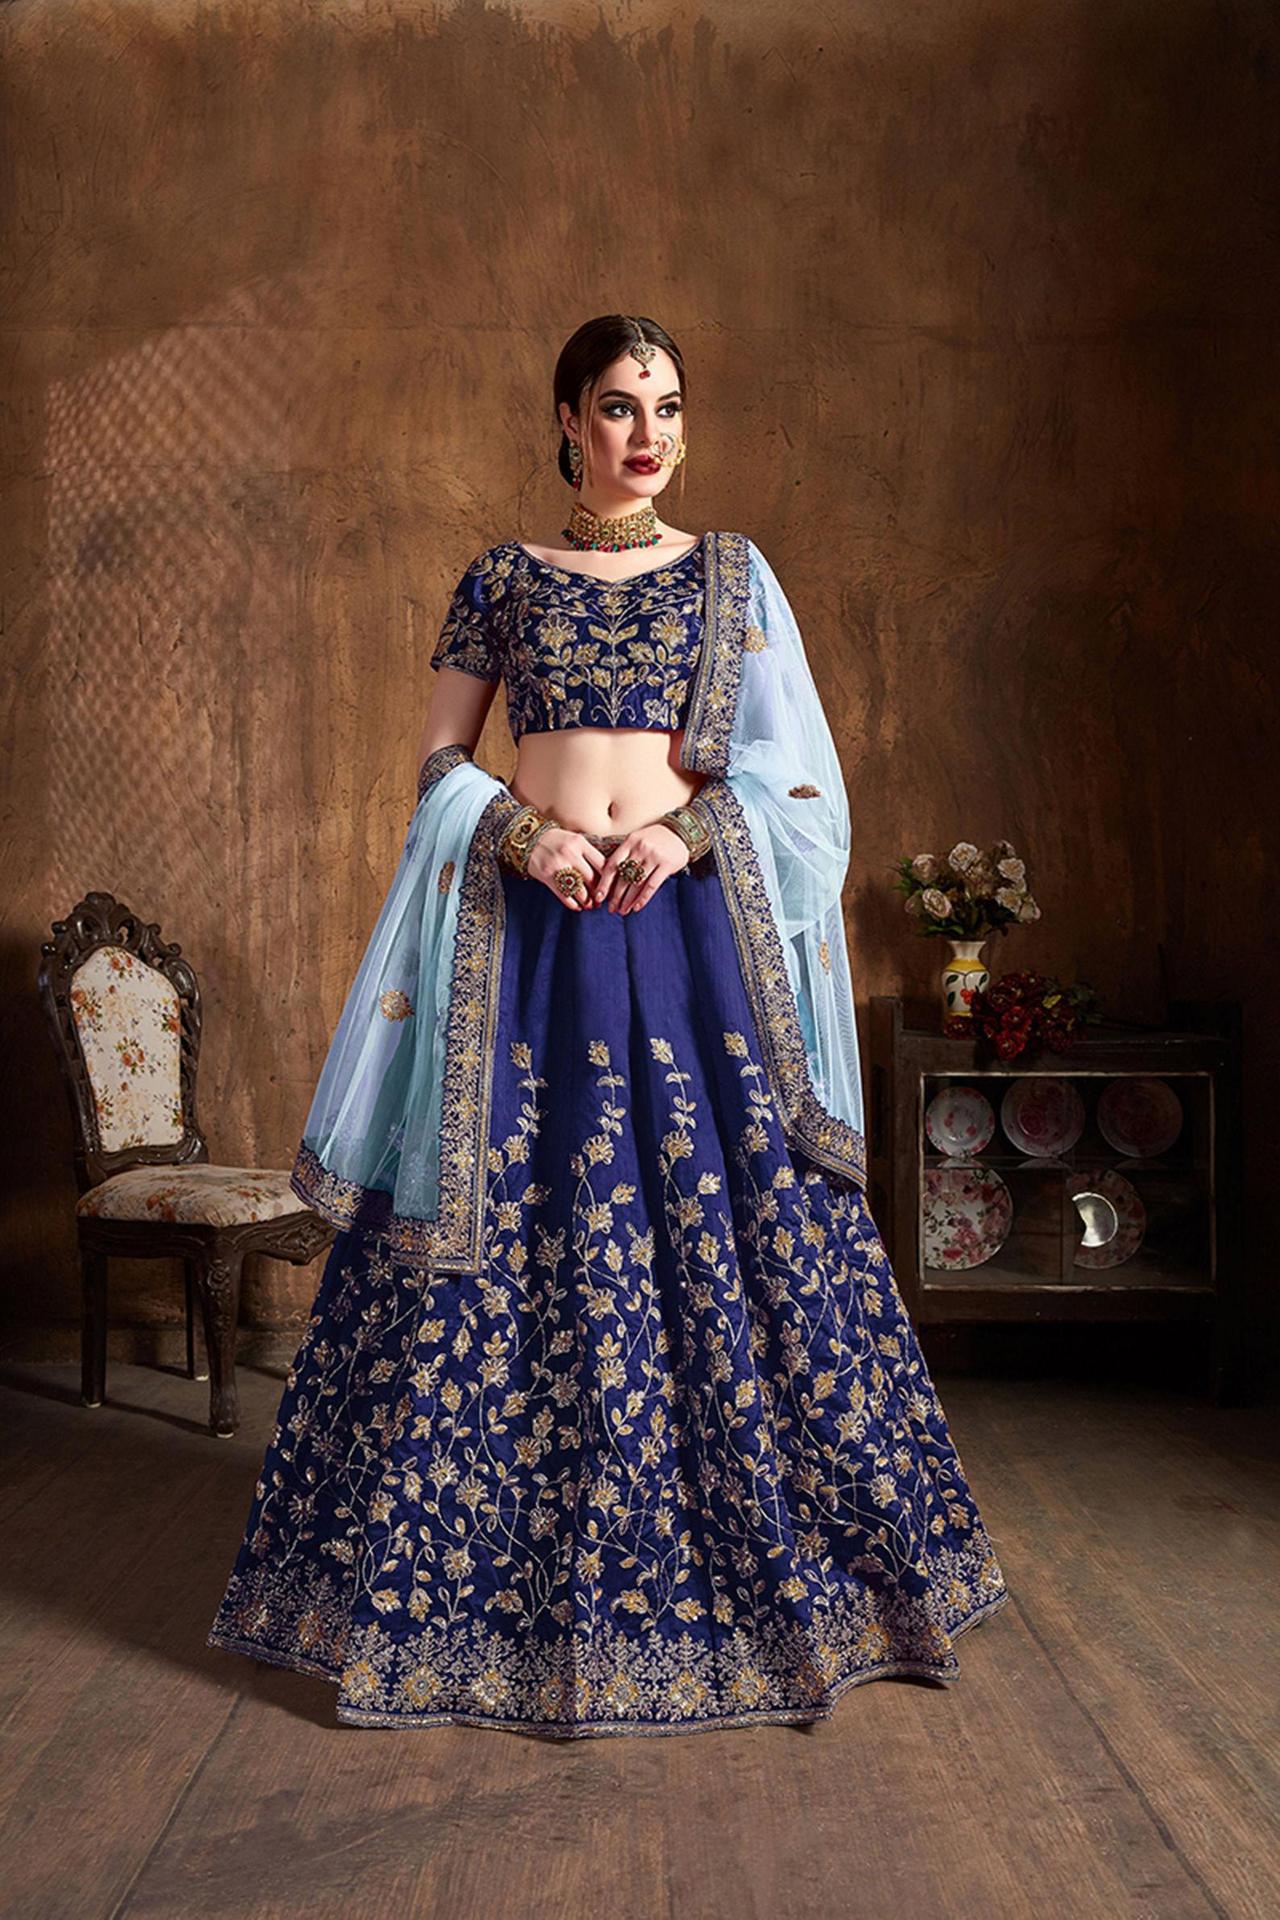 Indian Wedding Dresses: Find Latest Indian Wedding Outfits at Utsav Fashion